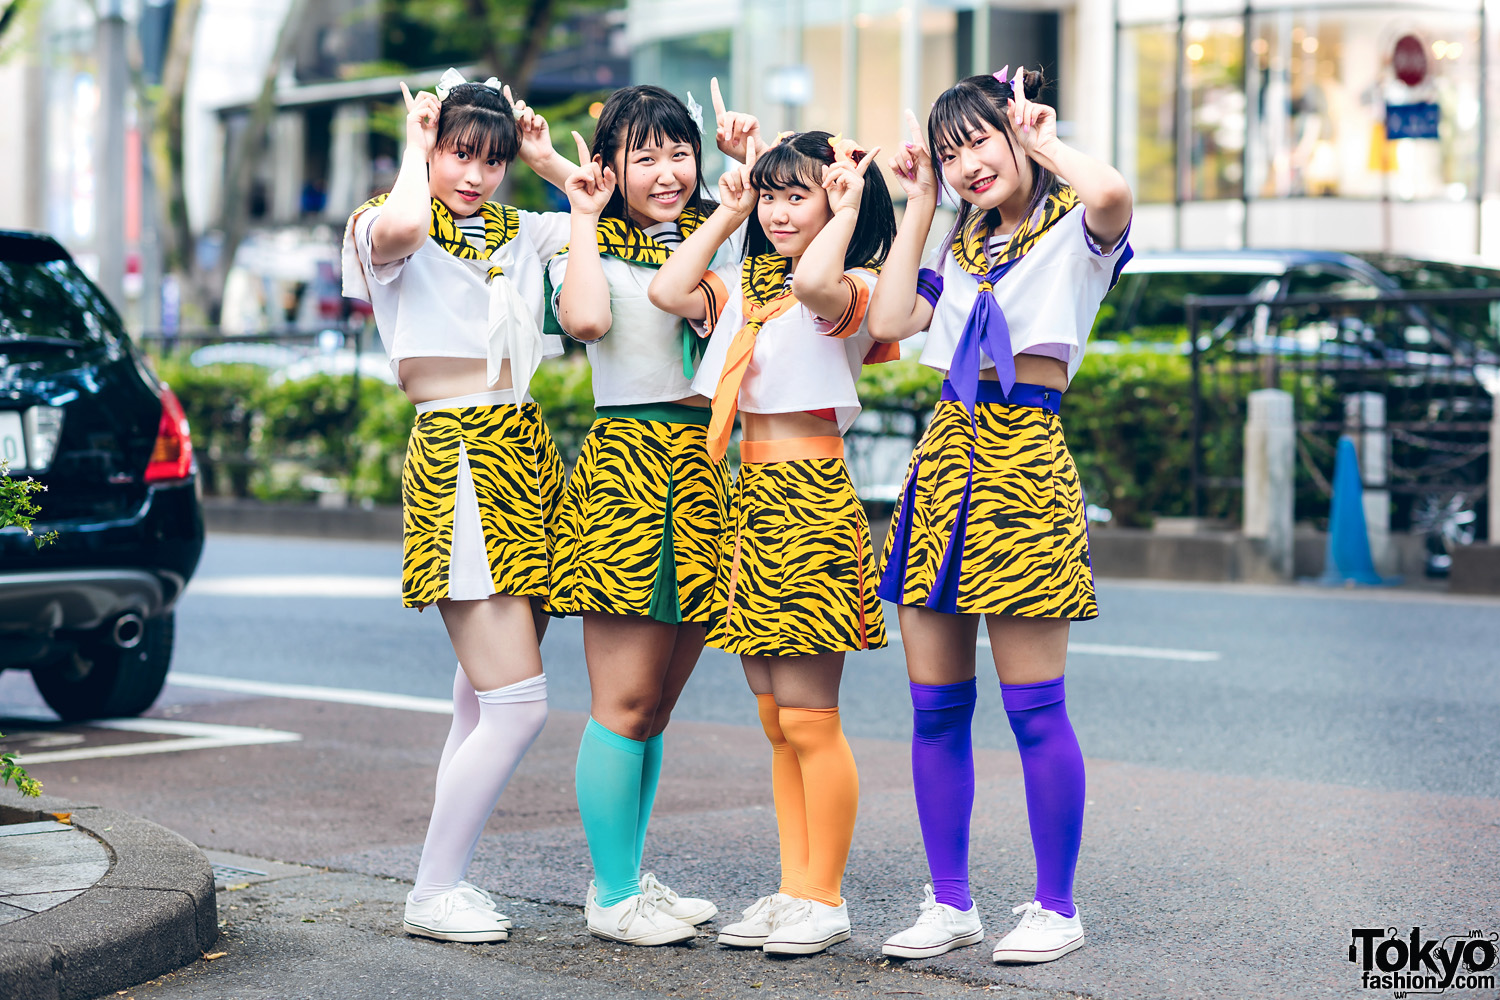 Japanese Idols Harajuku Style w/ Tiger Print & Color-Coordinated Fashion